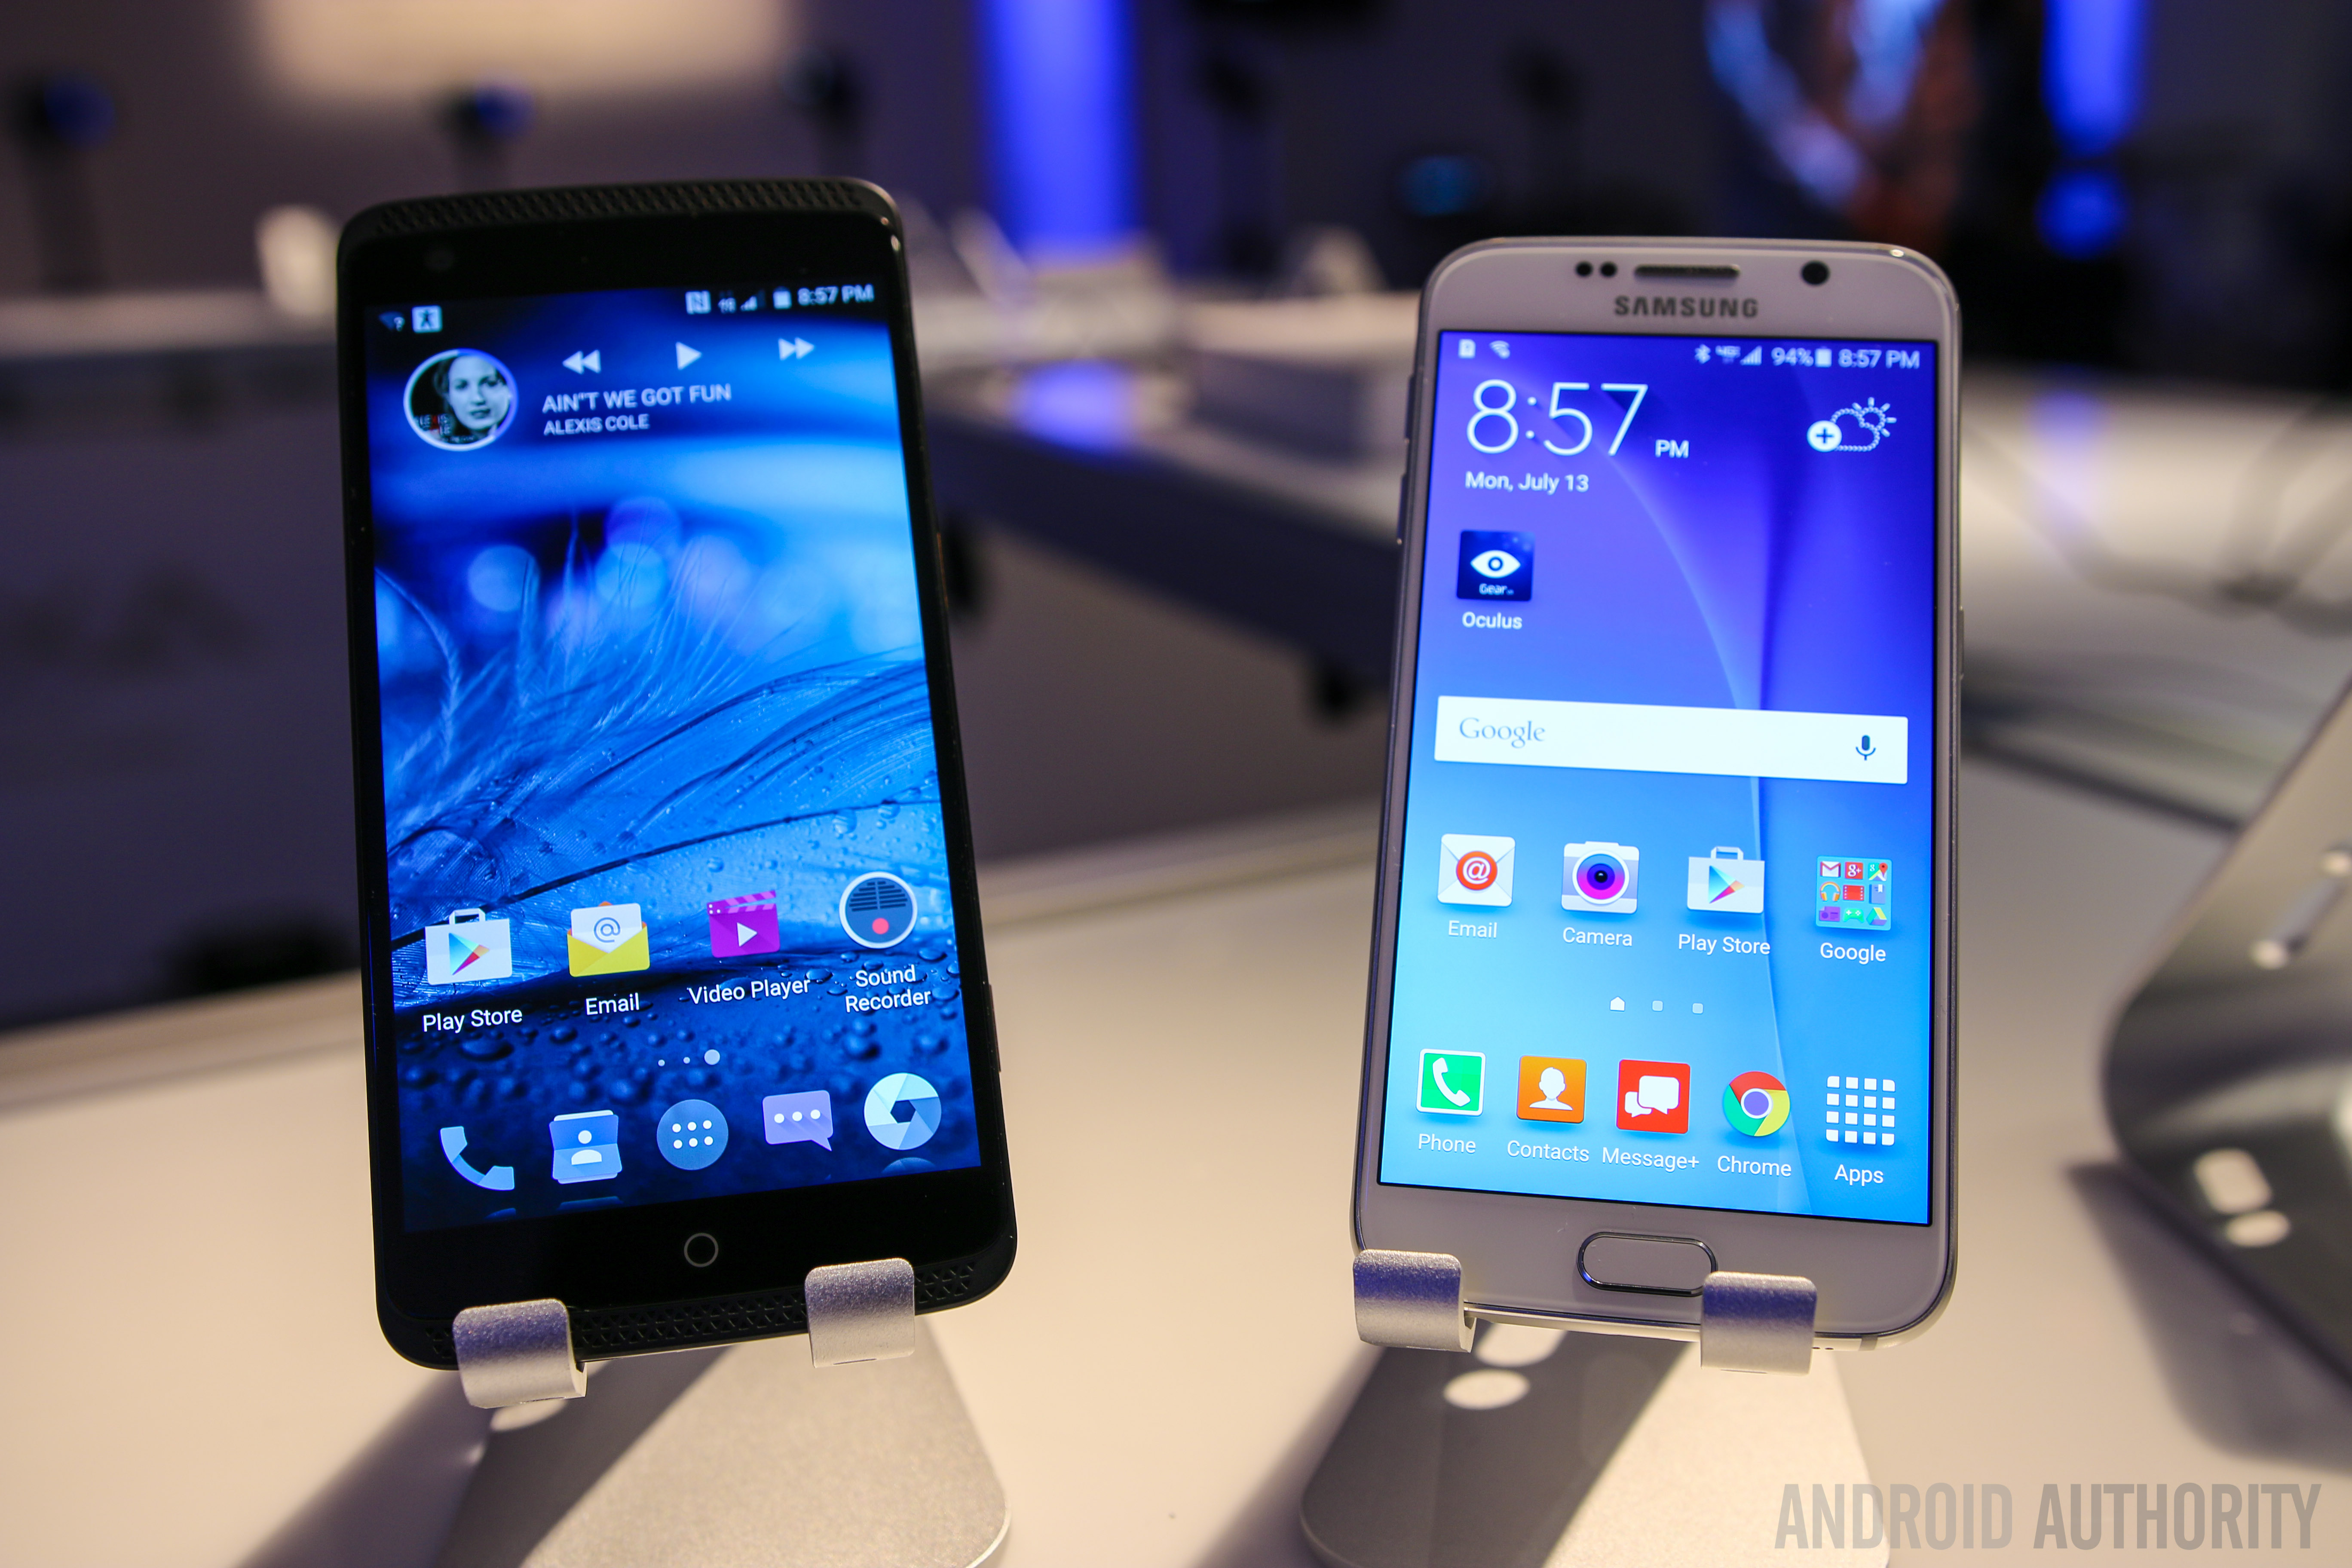 ZTE AXON Phone vs Samsung Galaxy S6 Quick Look-6